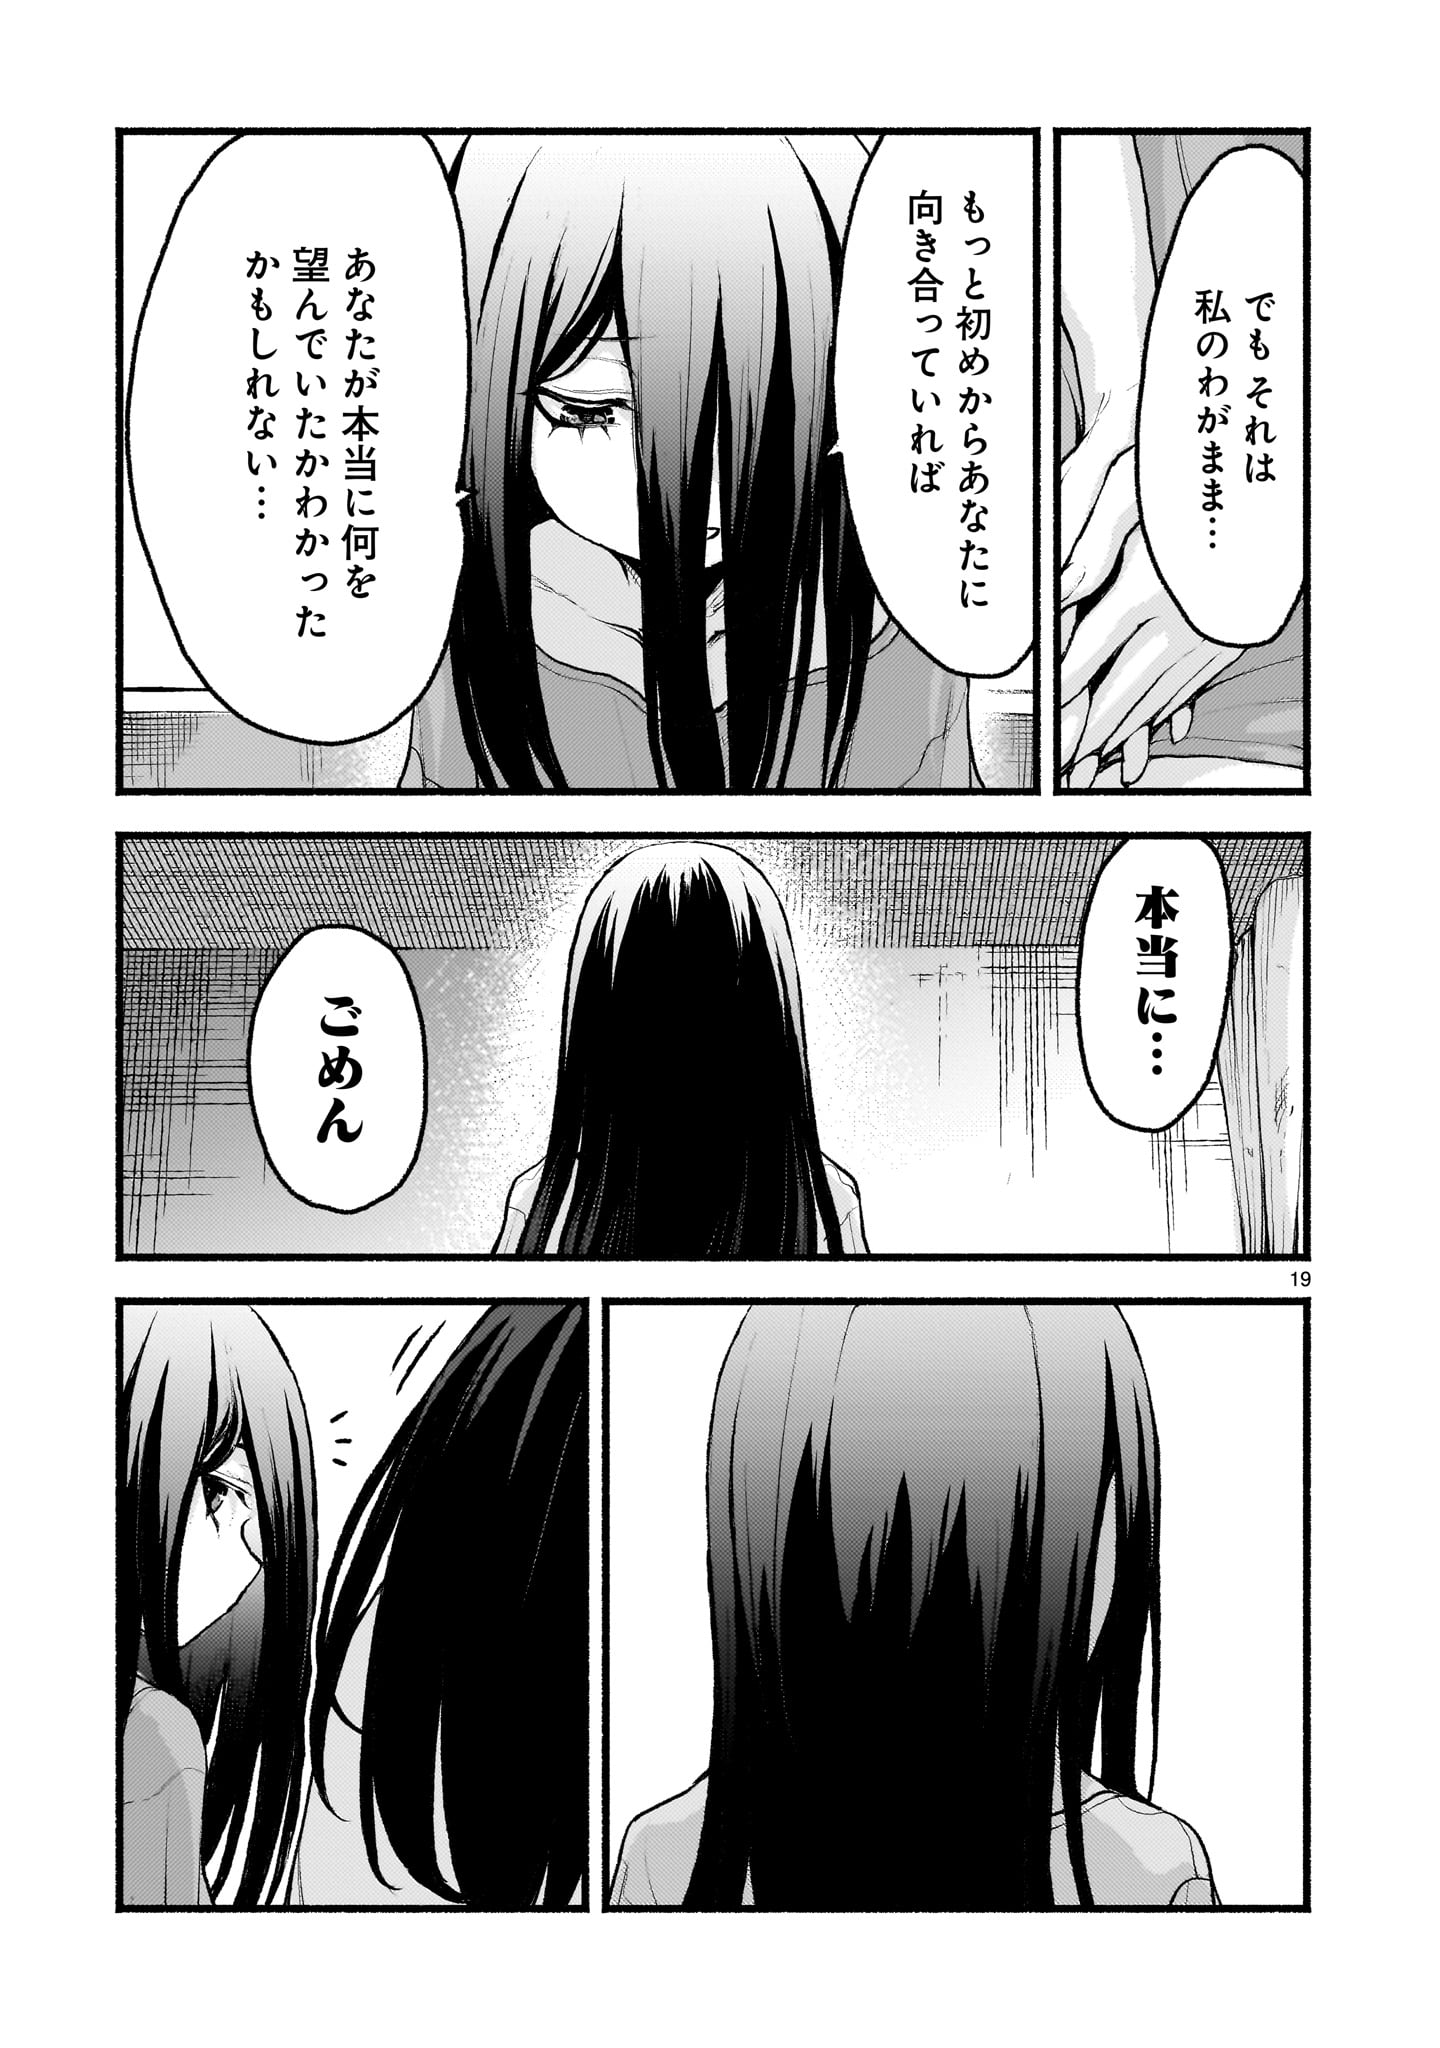 Kaminaki Sekai no Kamisama Katsudou - Chapter 54.1 - Page 19